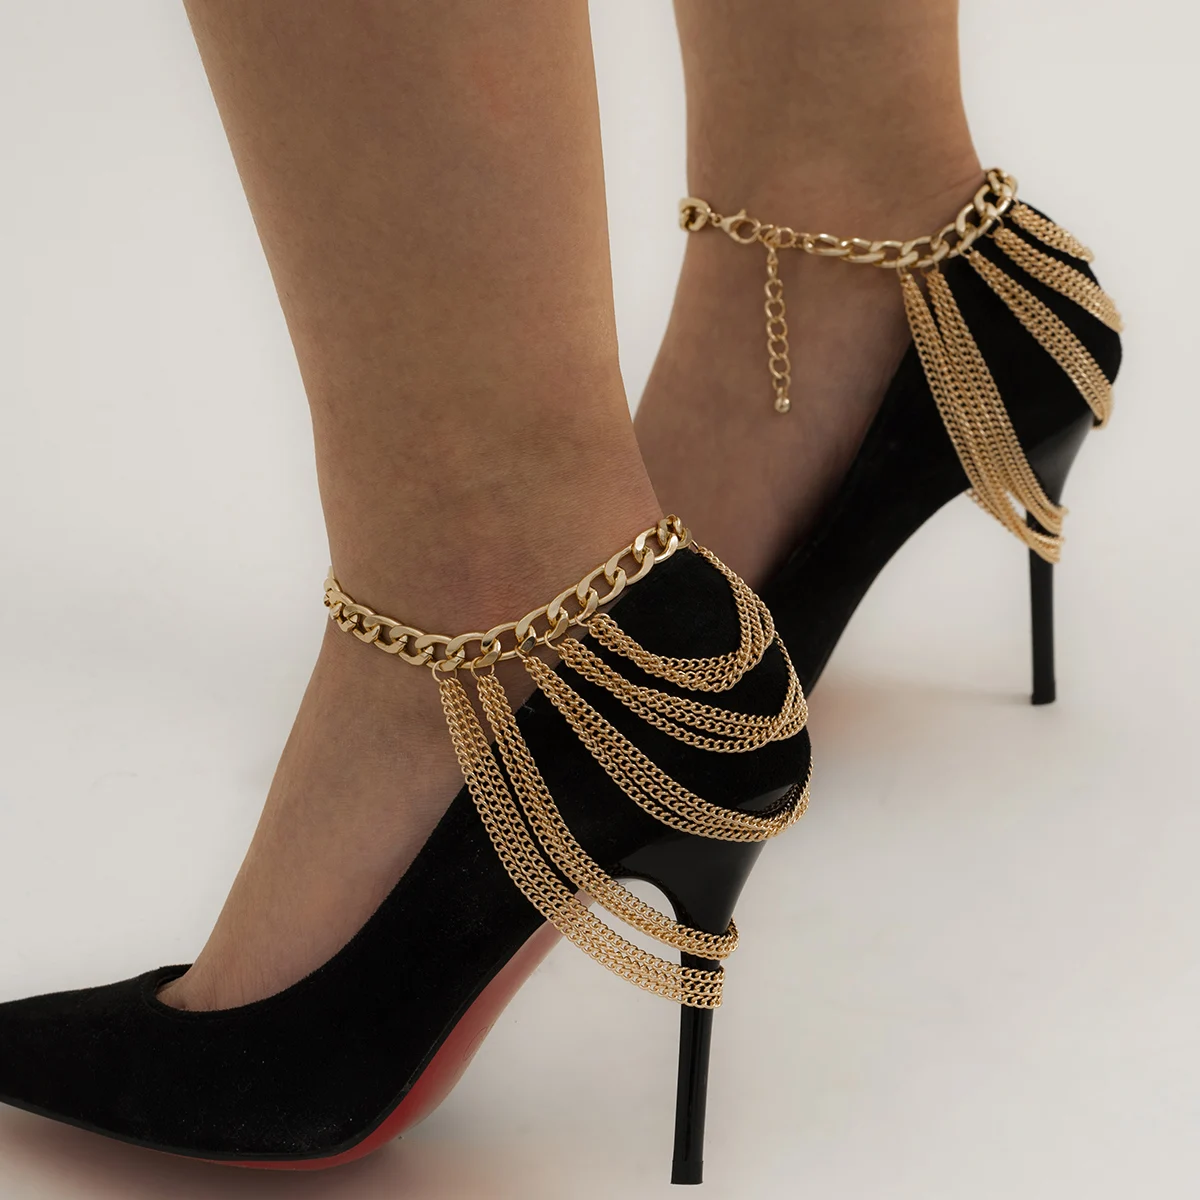 Ingemark 1PC Multilayer High Heel Shoe Tassel Chain Foot Ankle Bracelet for Women Crystal Pearl Beach Barefoot Sandals JewelryPr